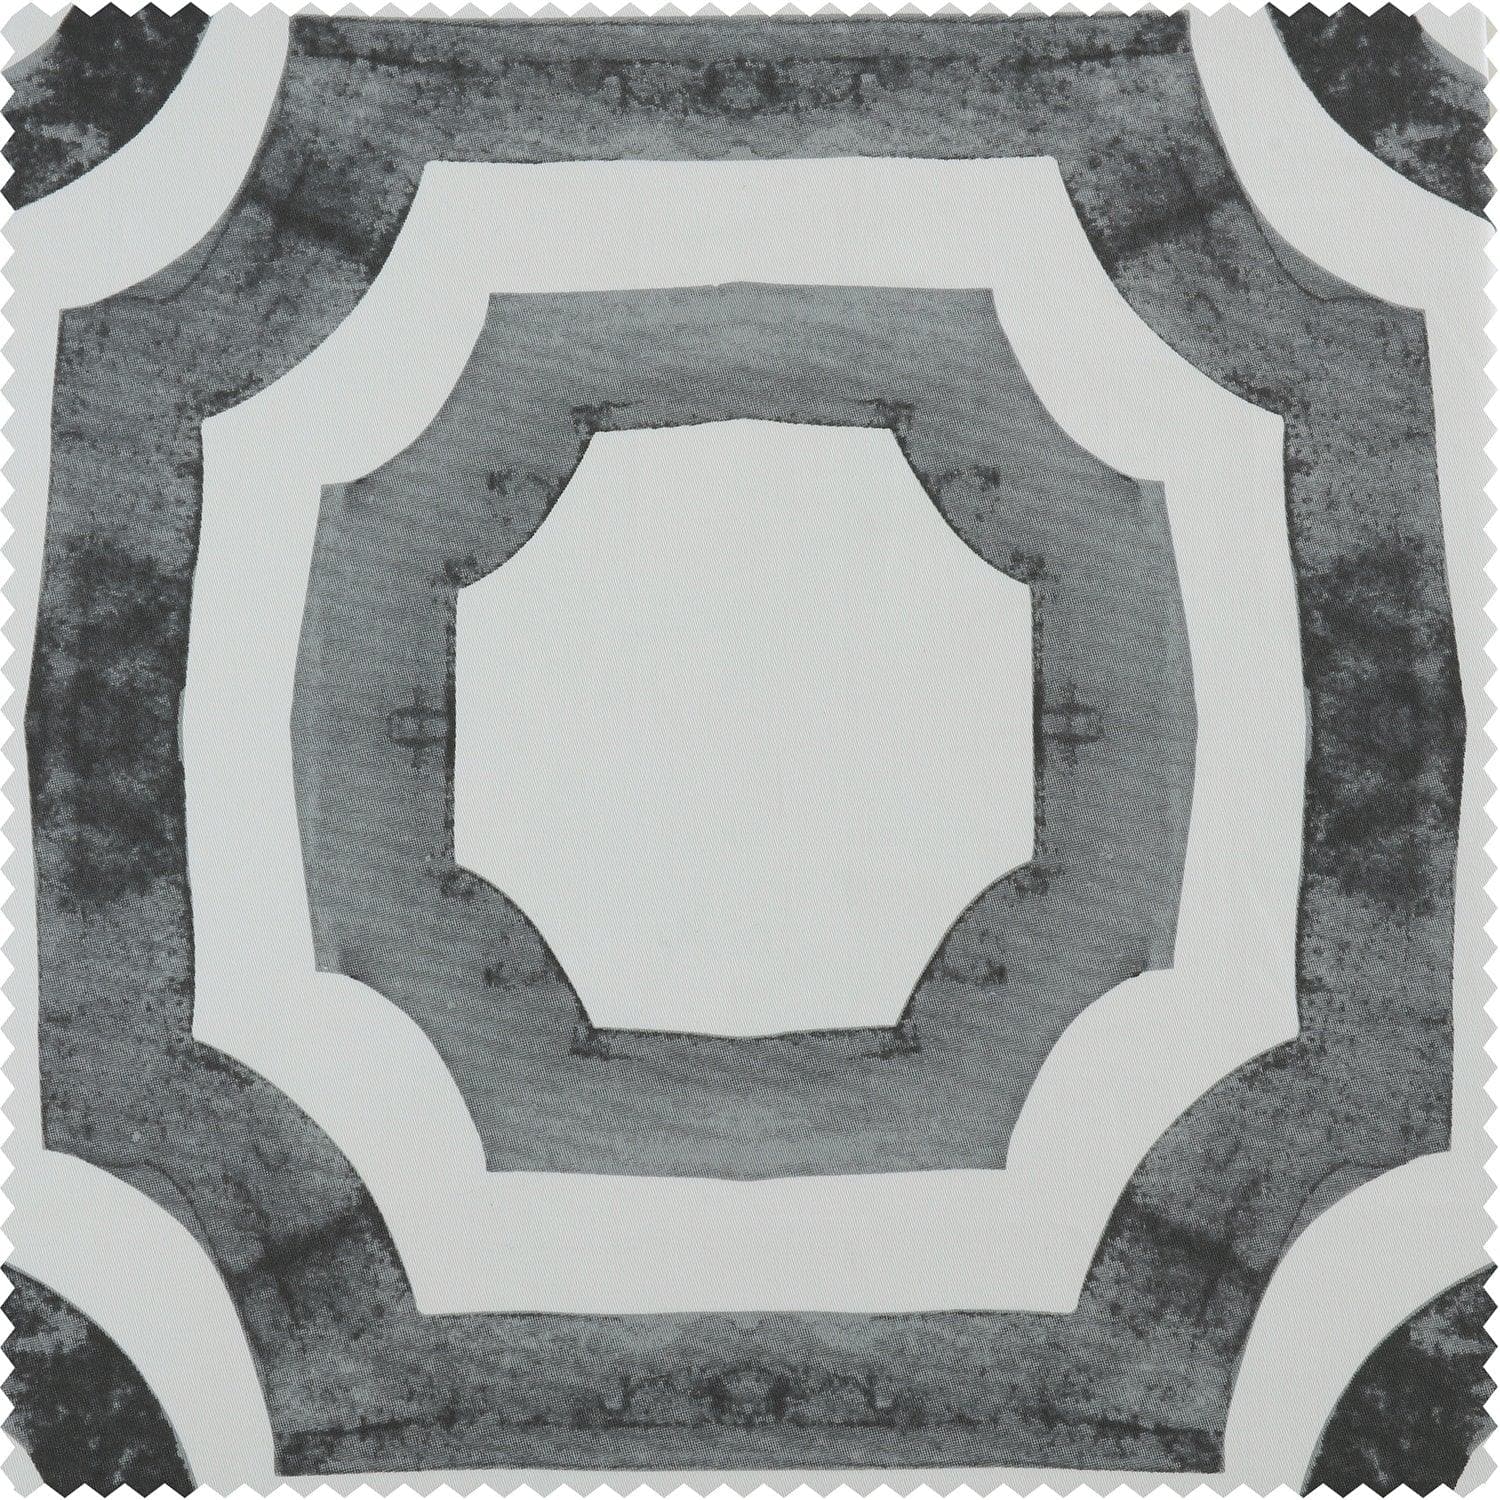 Mecca Steel Emblem Printed Cotton Window Valance